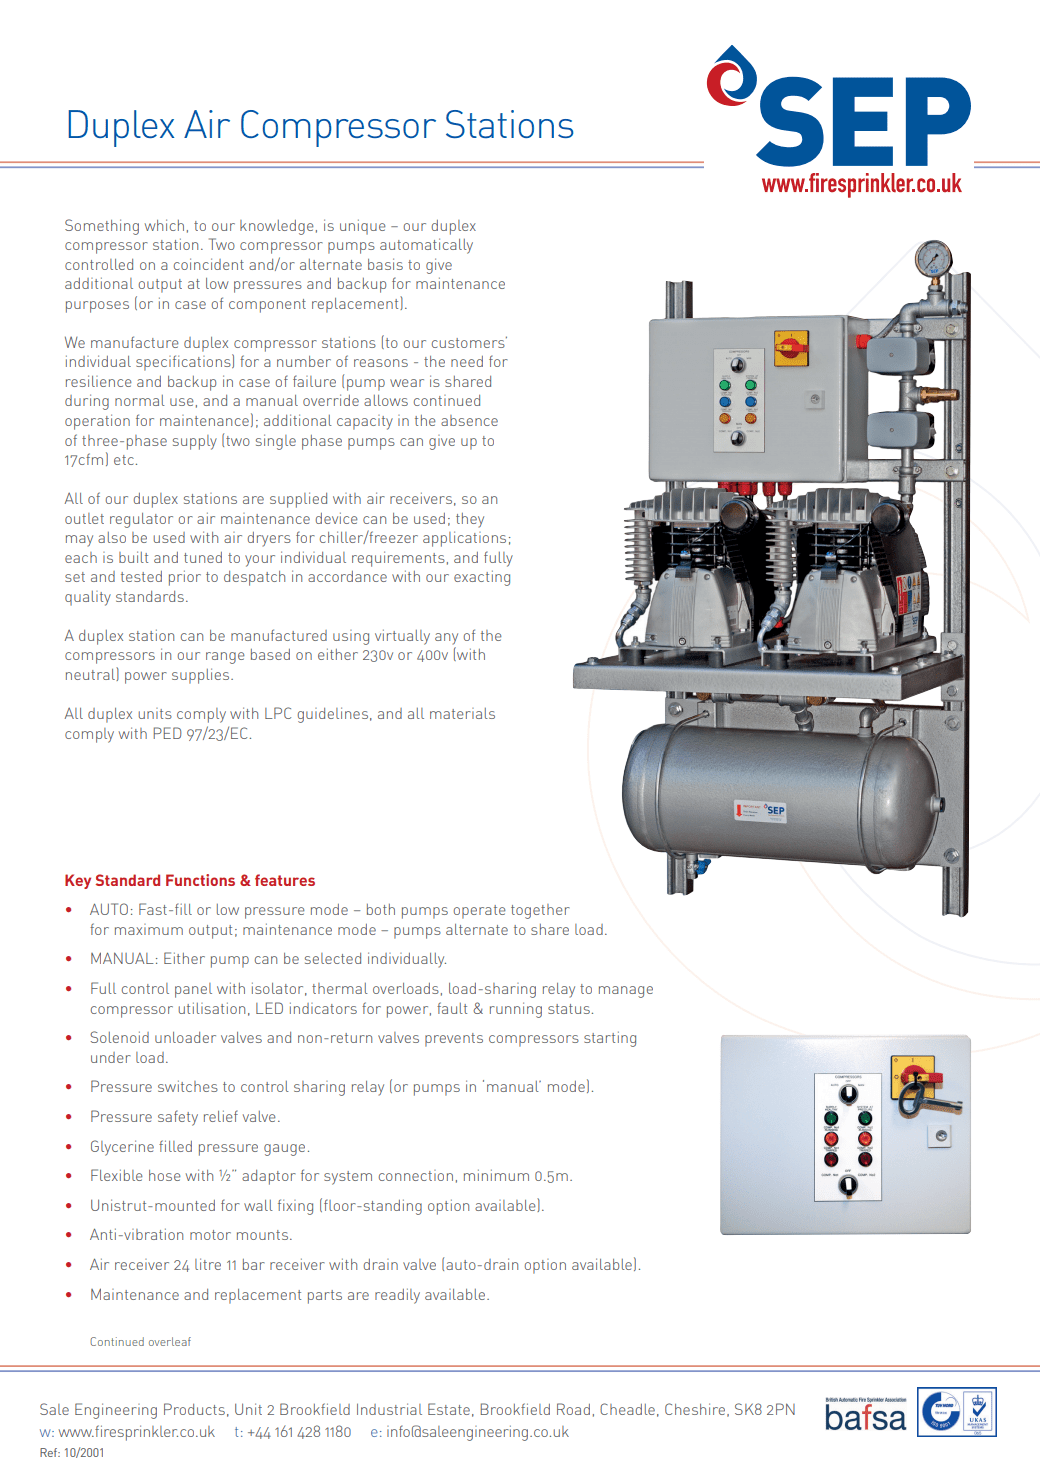 Air Compressors for Sprinkler Systems